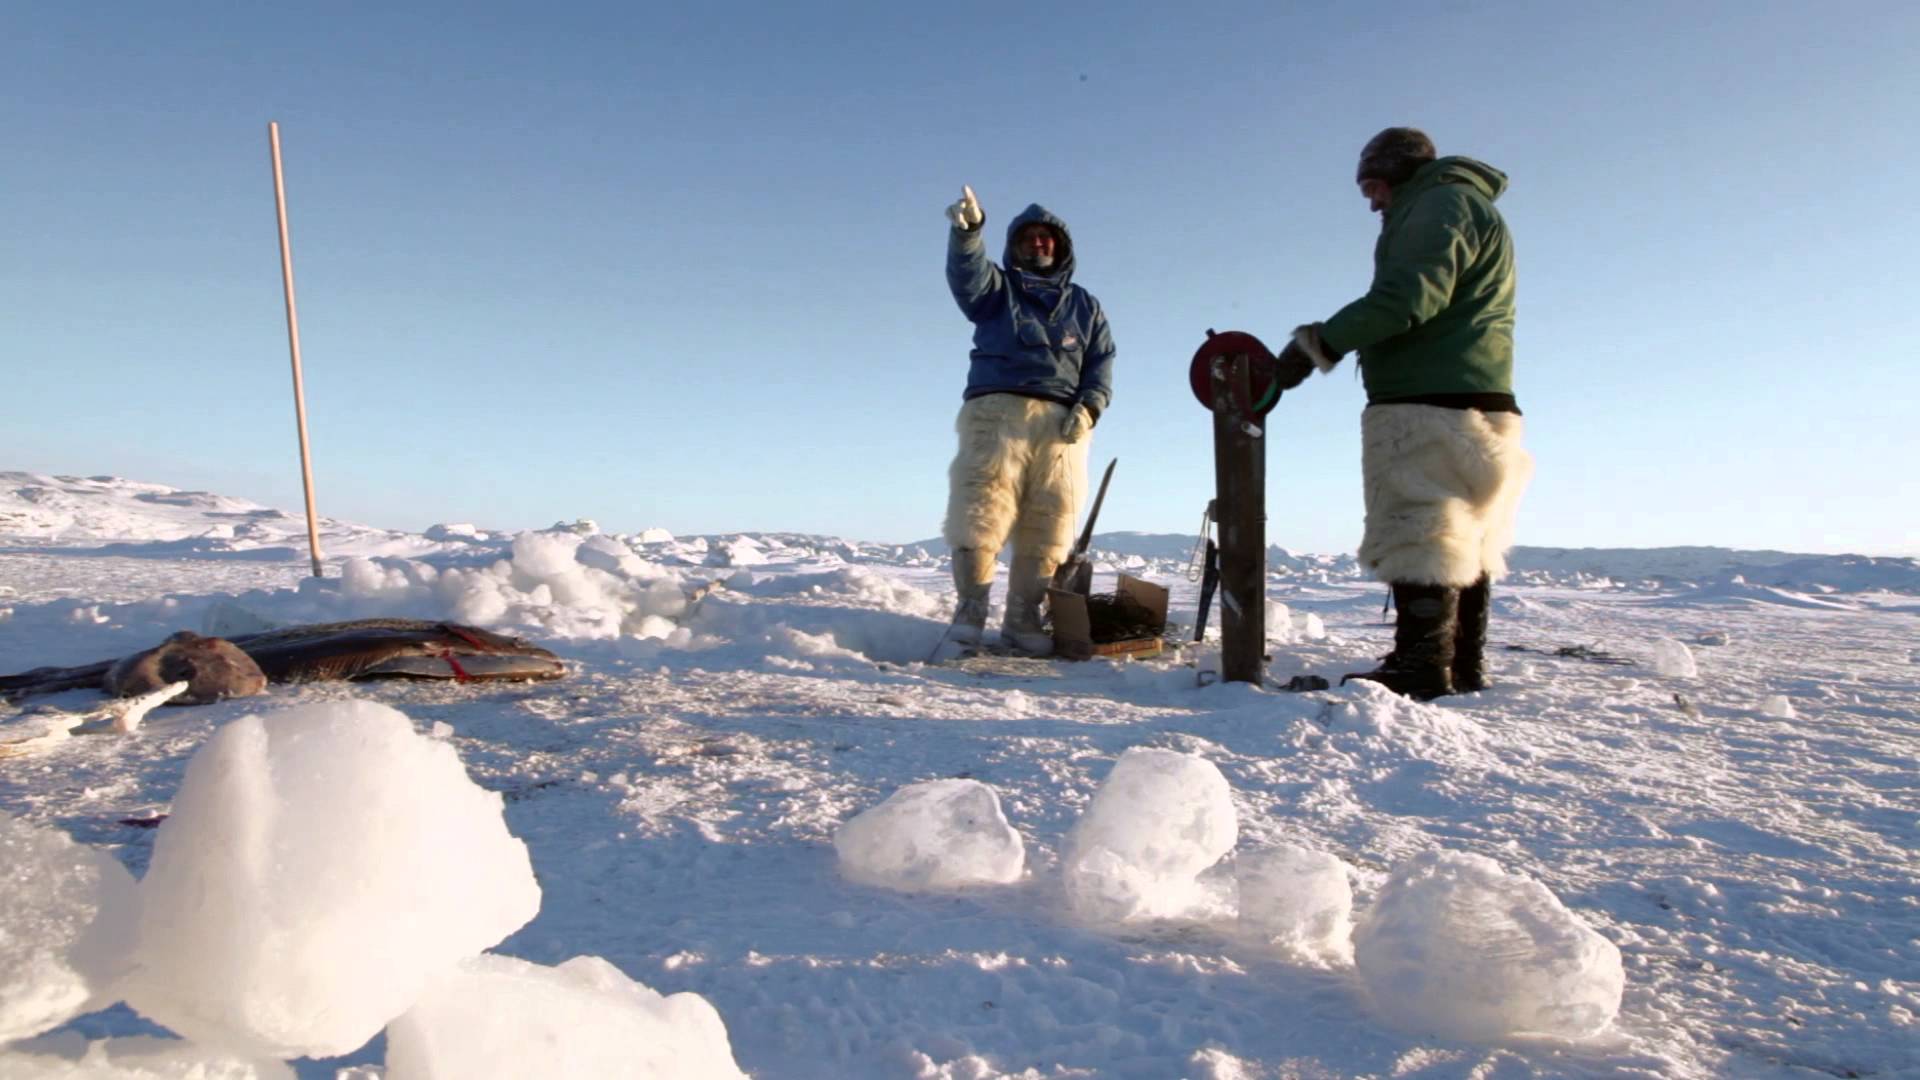 Ice Fishing in Greenland - YouTube